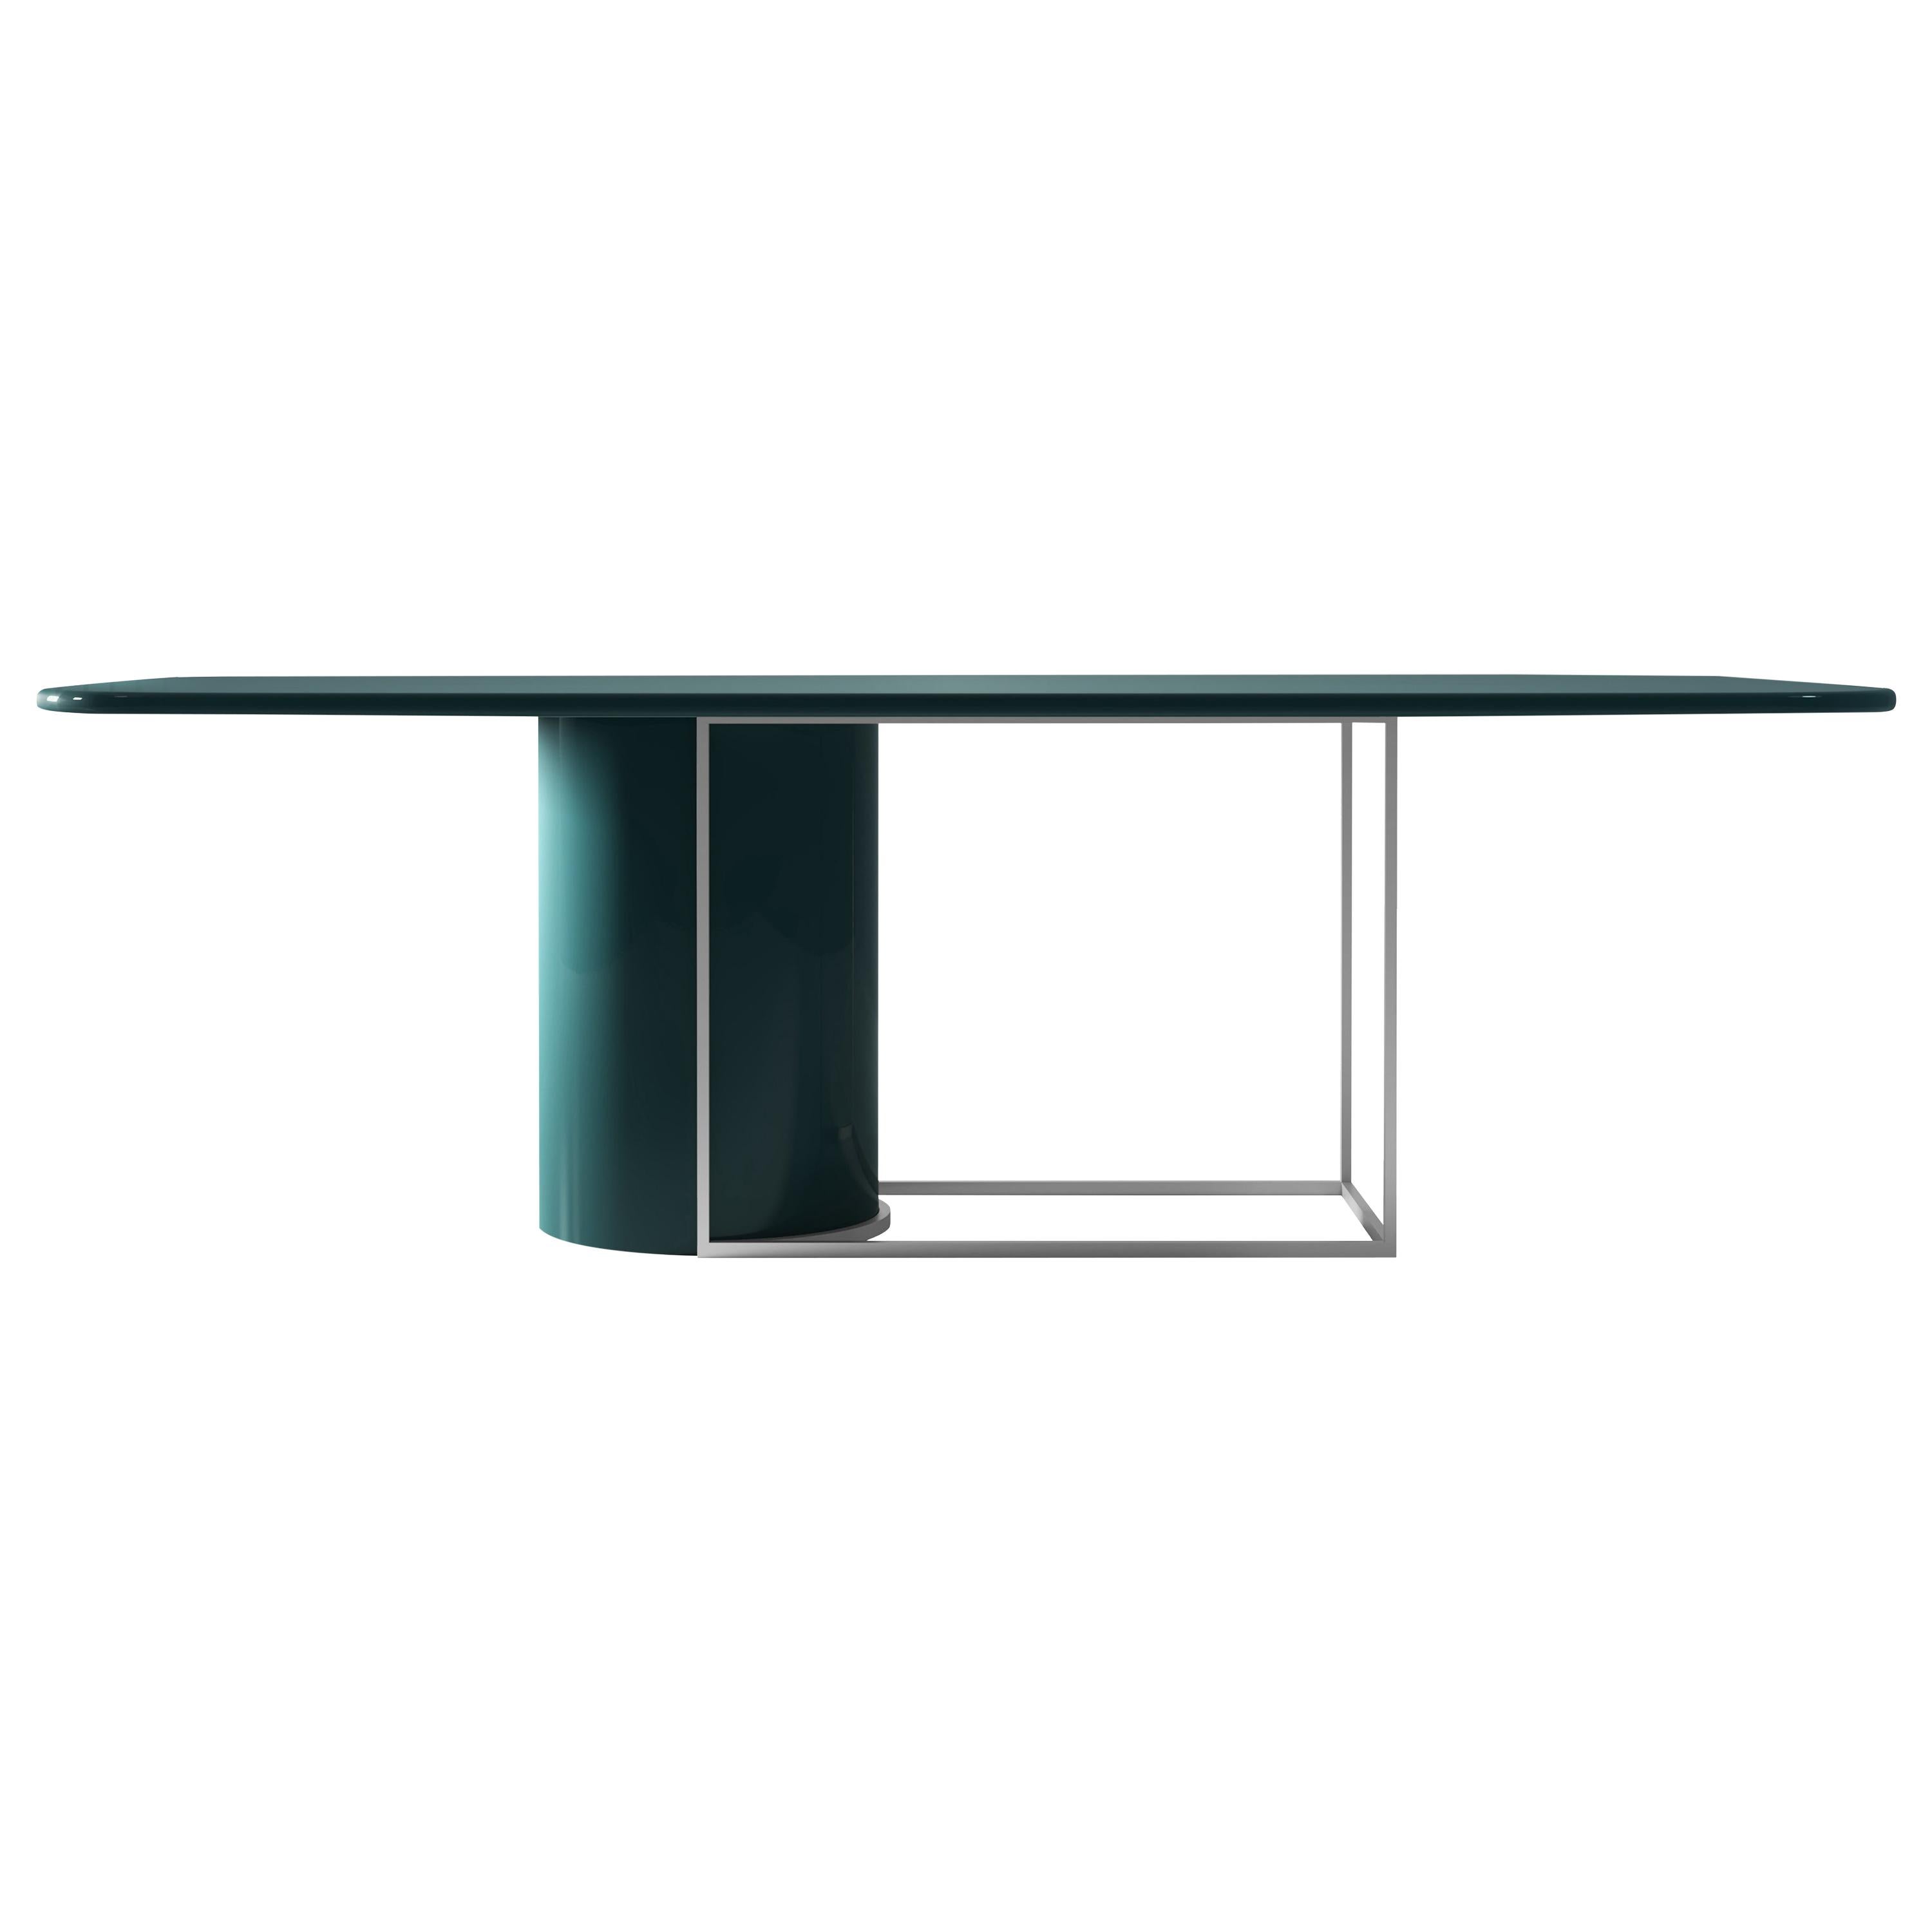 Artefatto Design Studio Dining Room Tables